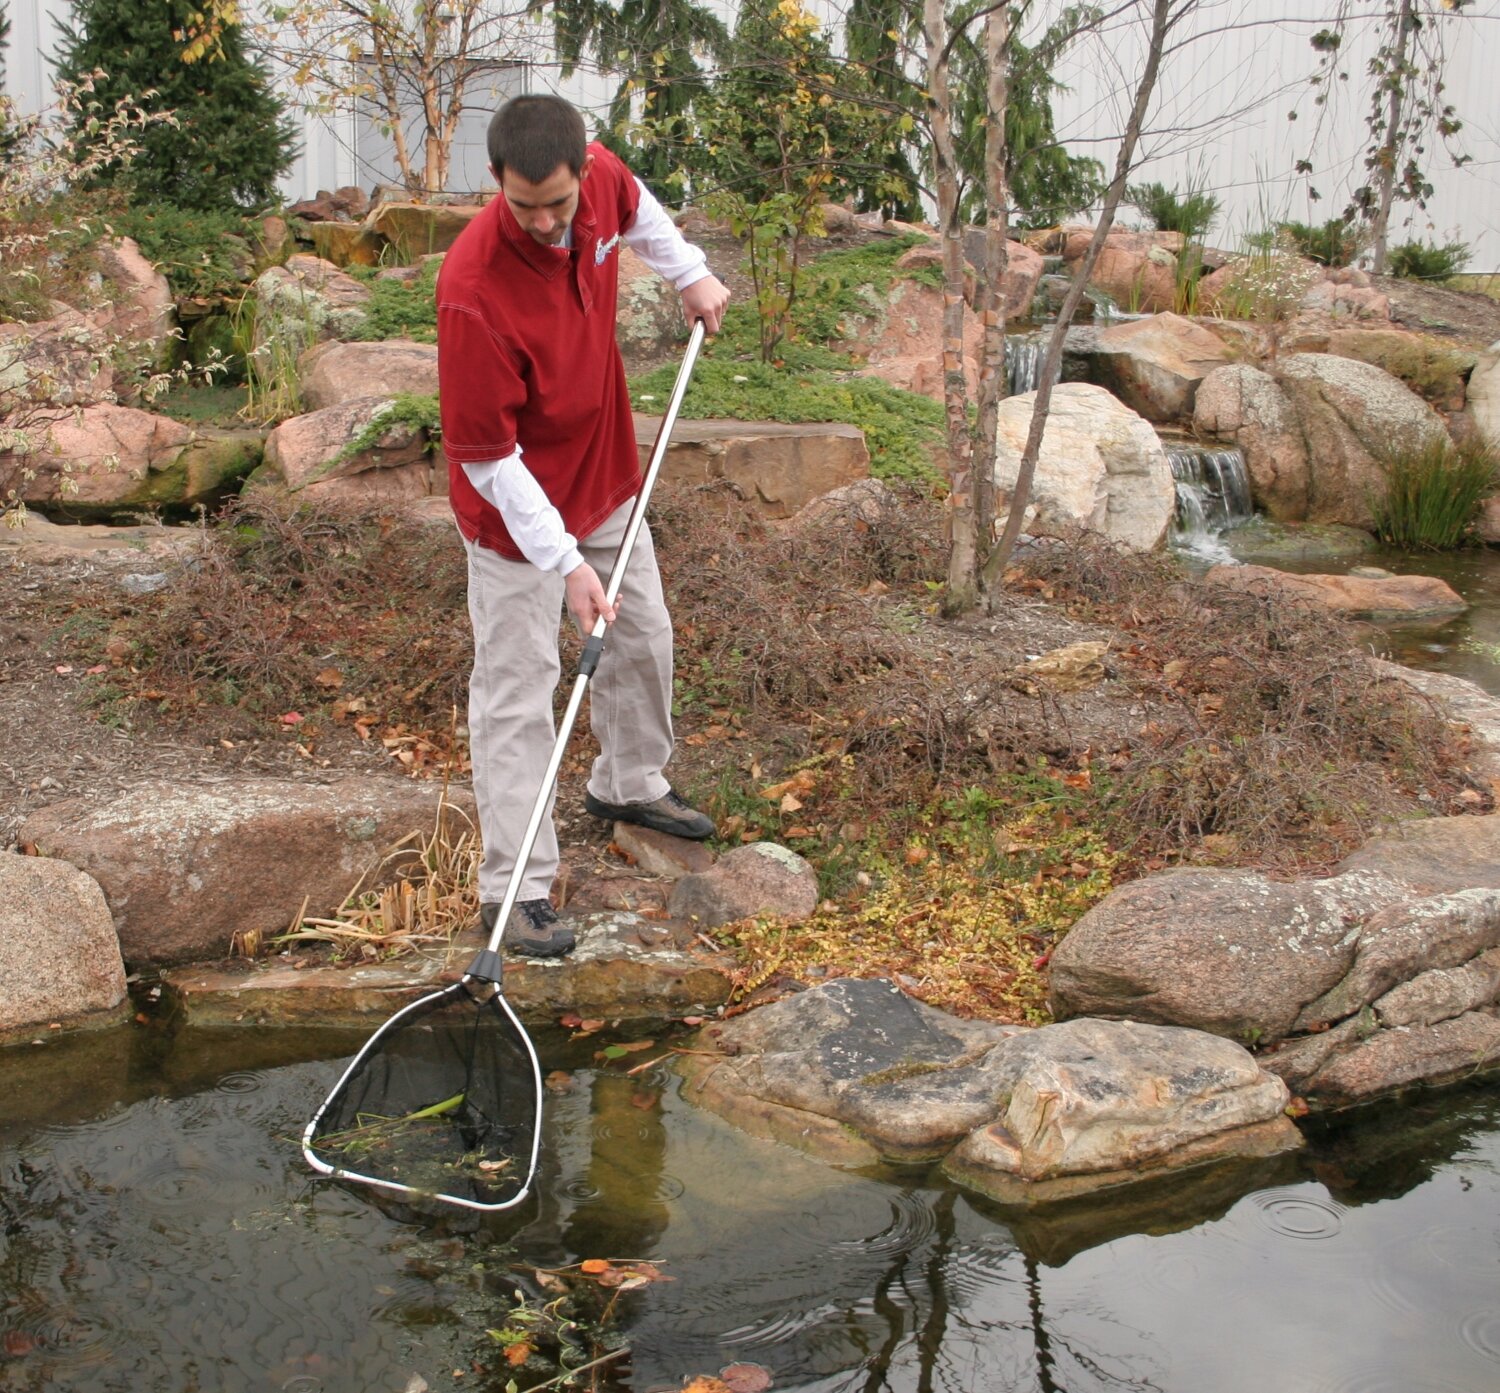 Aquascape Heavy Duty Pond Net With Extendable Handle